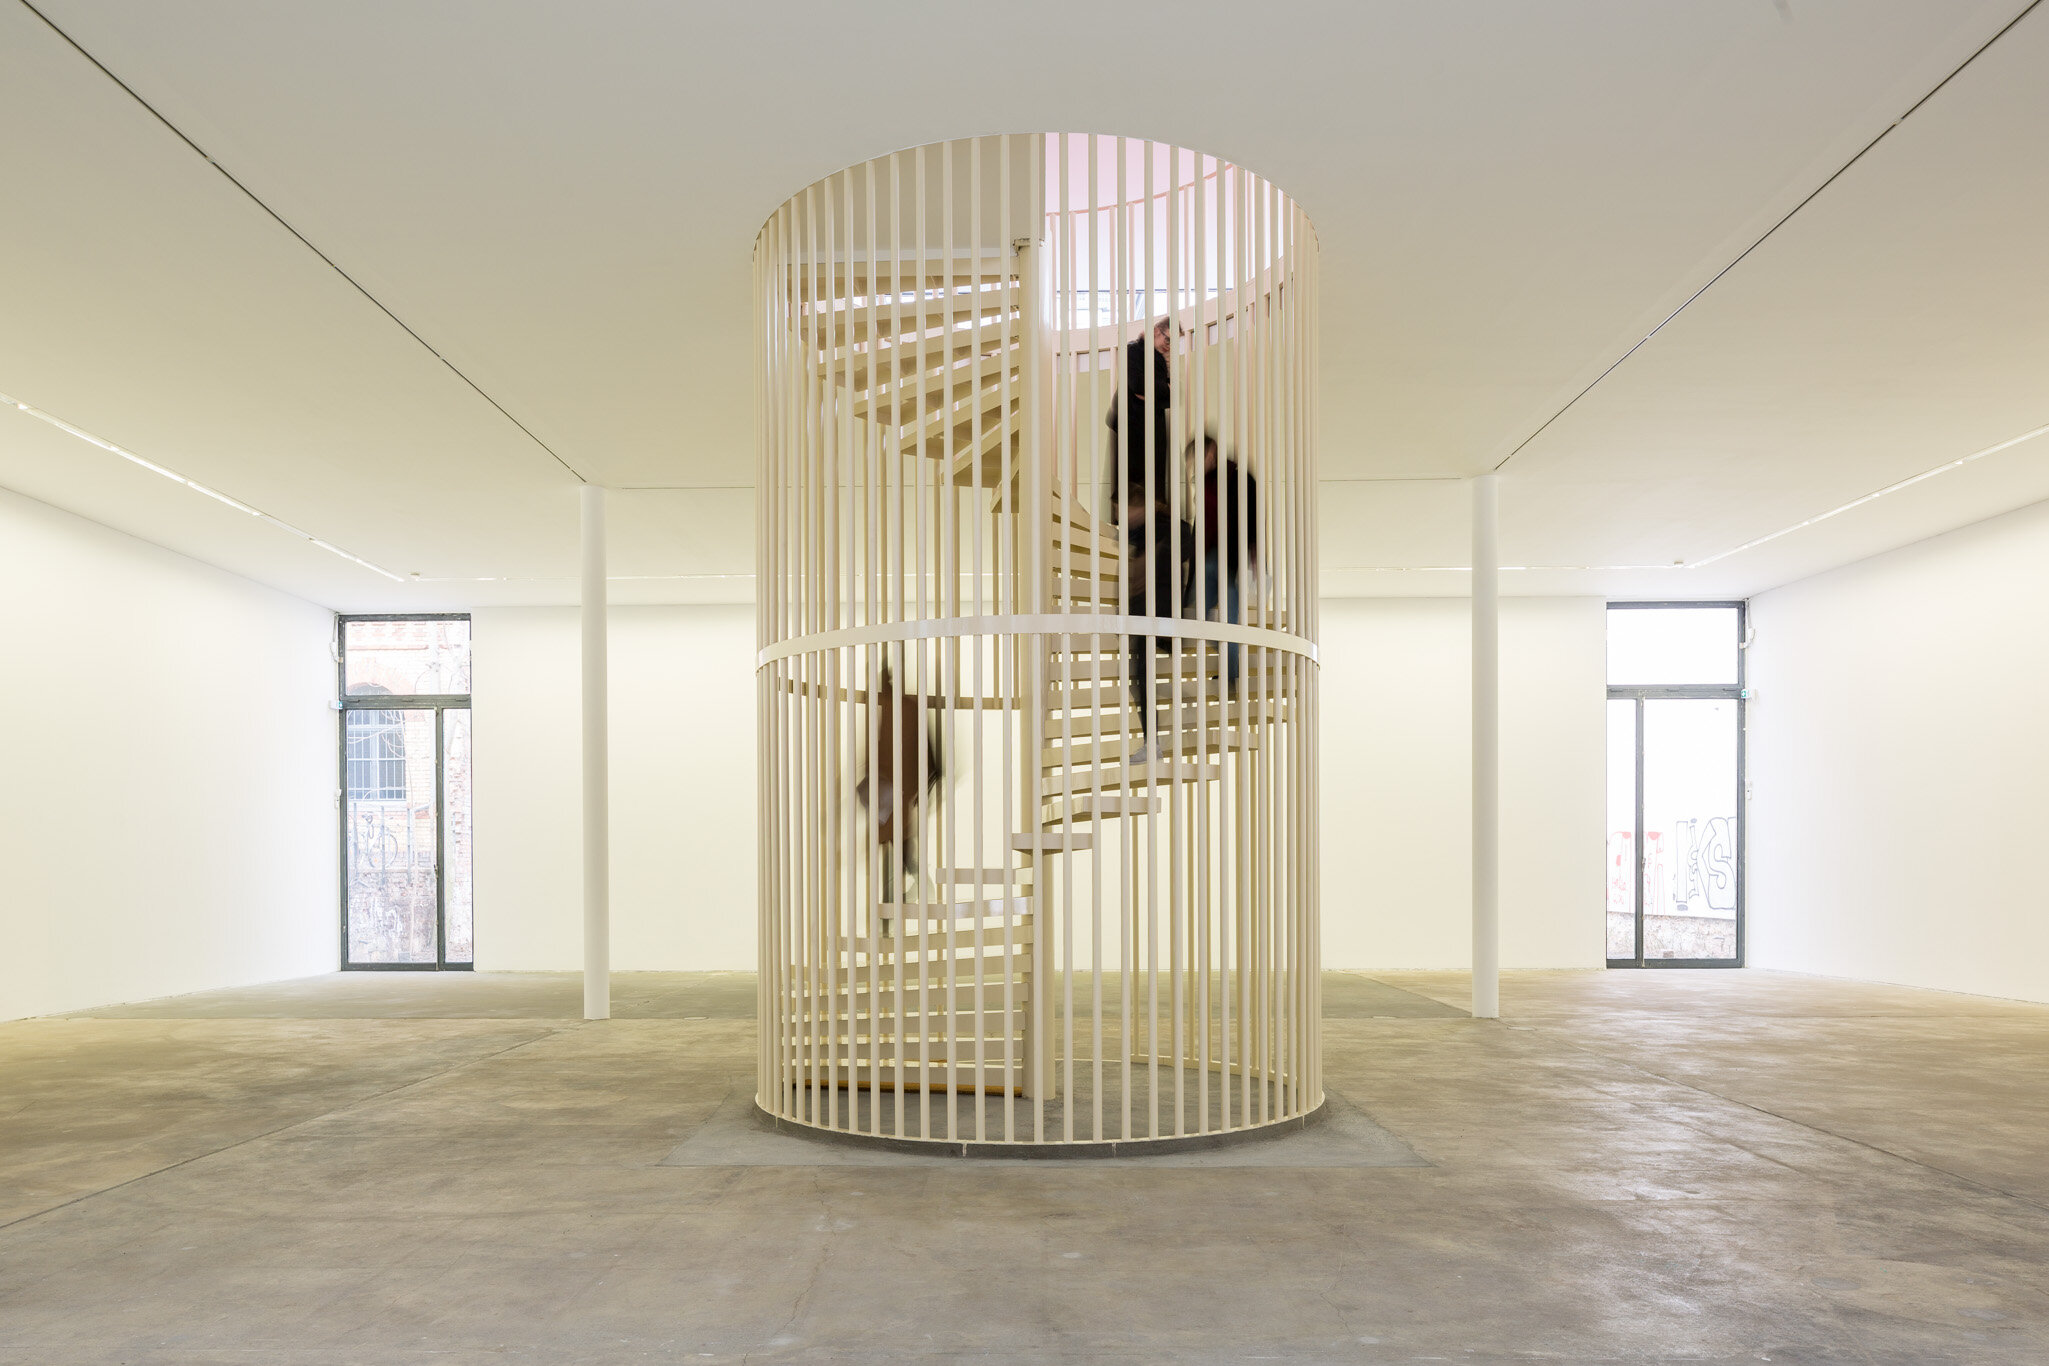  Hanne Lippard,  Flesh , 2016; installation view at KW Institute for Contemporary Art; Courtesy the artist and LambdaLambdaLambda, Prishtina; Photo: Frank Sperling 